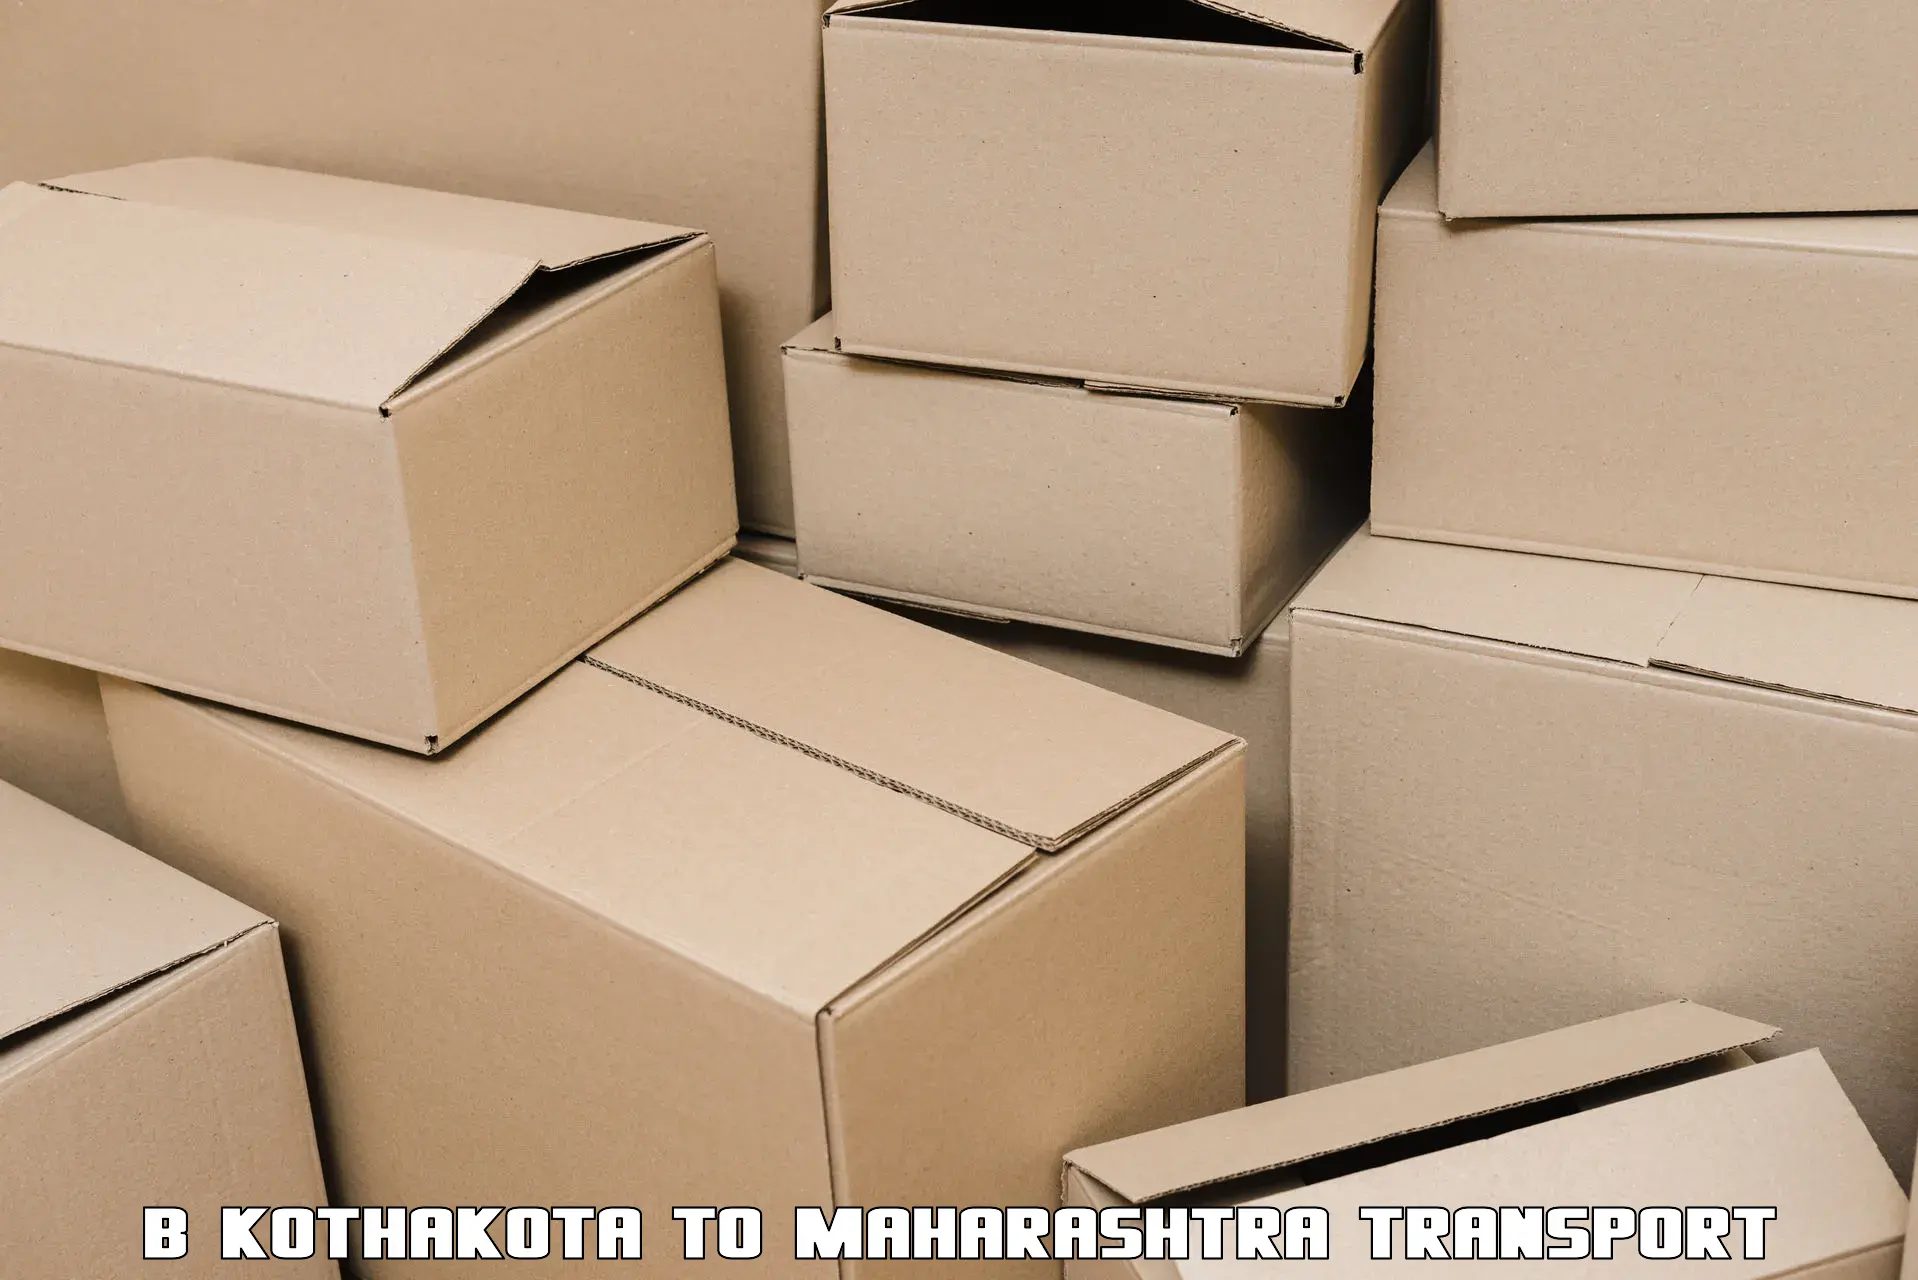 Goods delivery service B Kothakota to Chakan